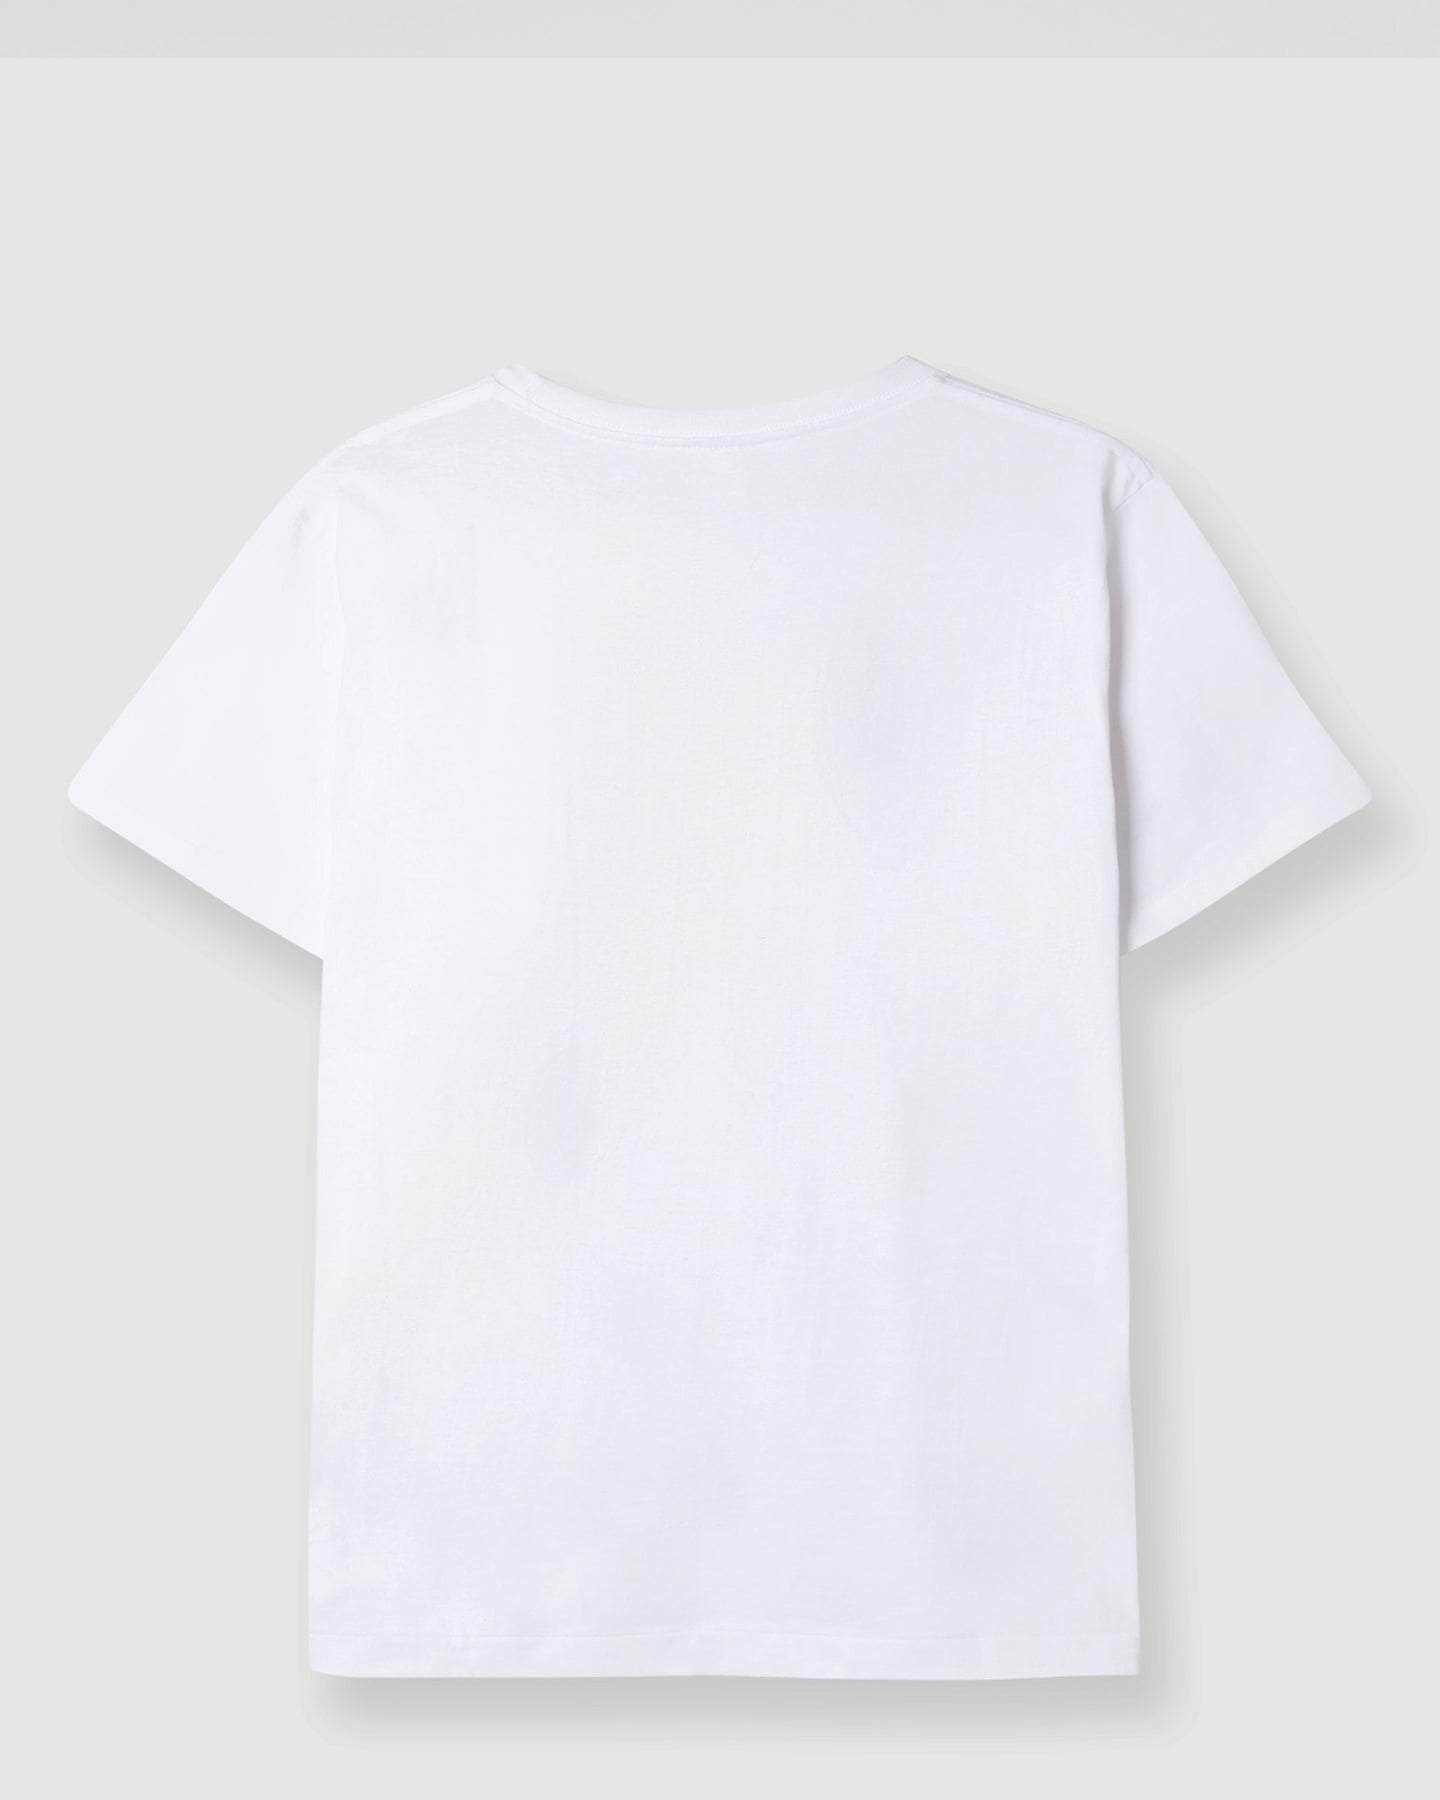 Logo Soho London S/S T-Shirt White